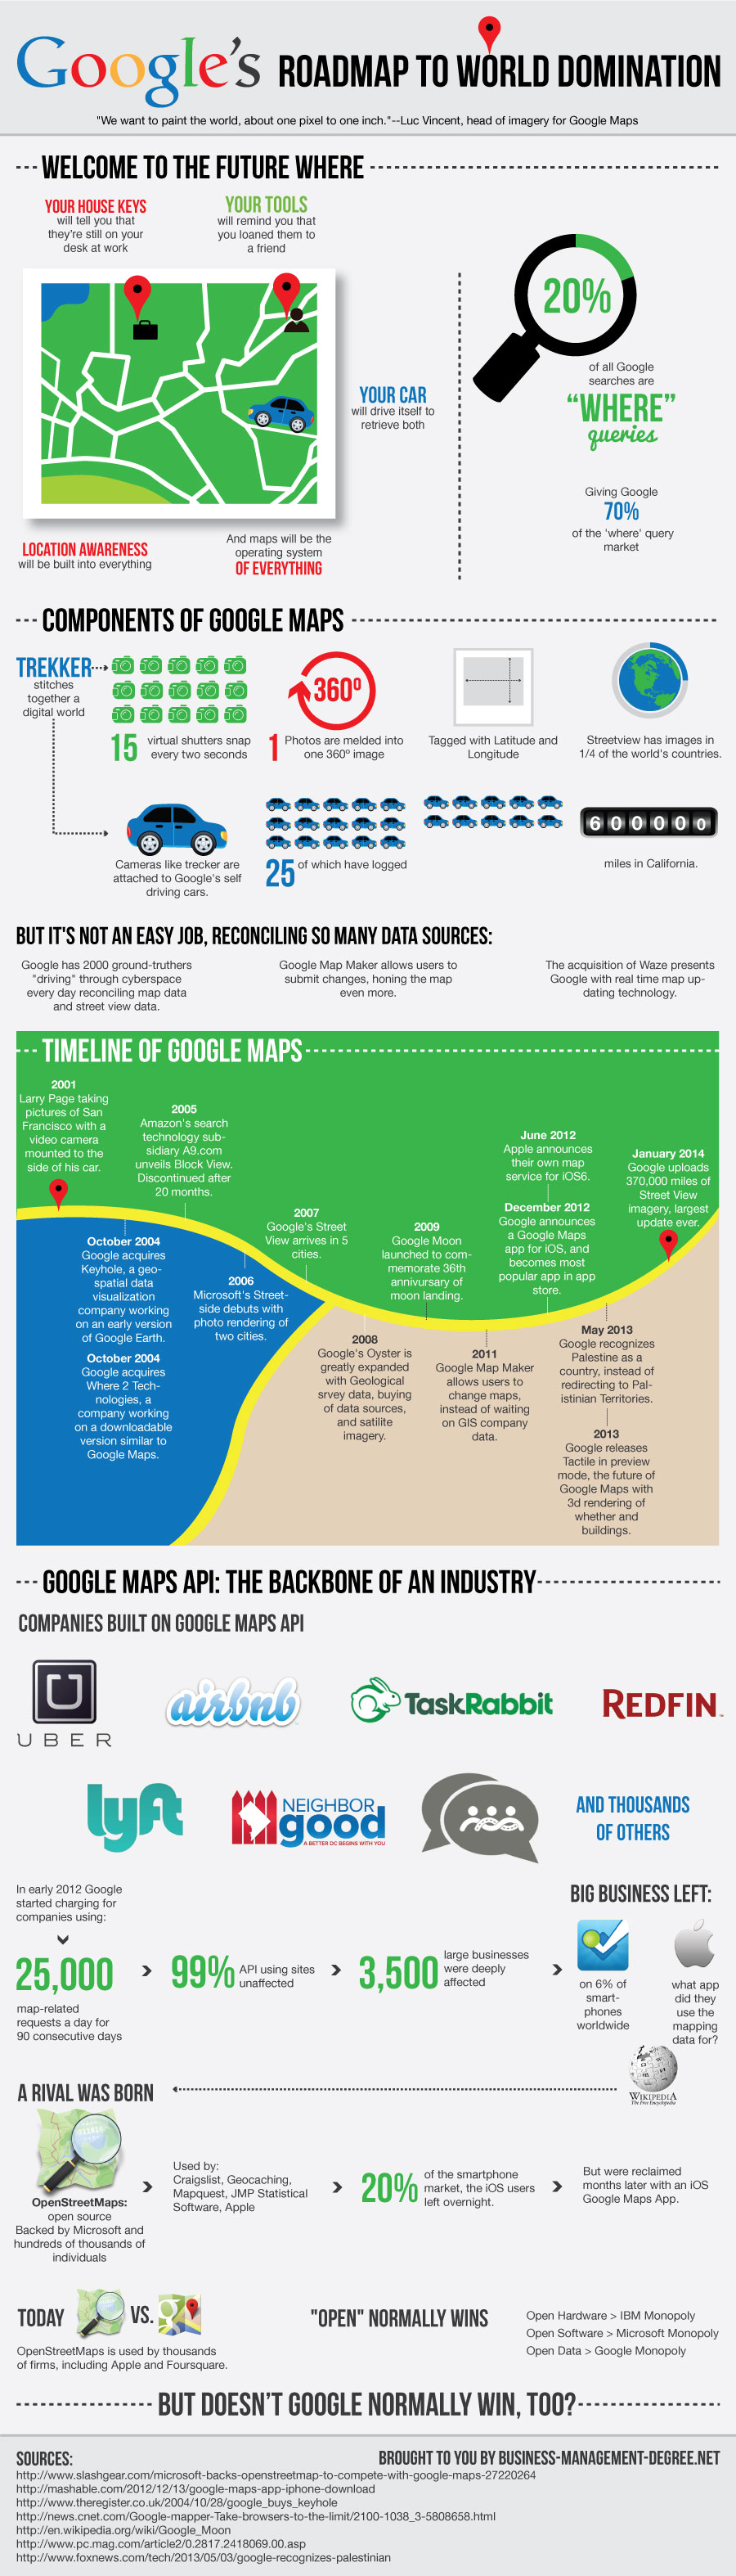 Google’s Roadmap to World Domination